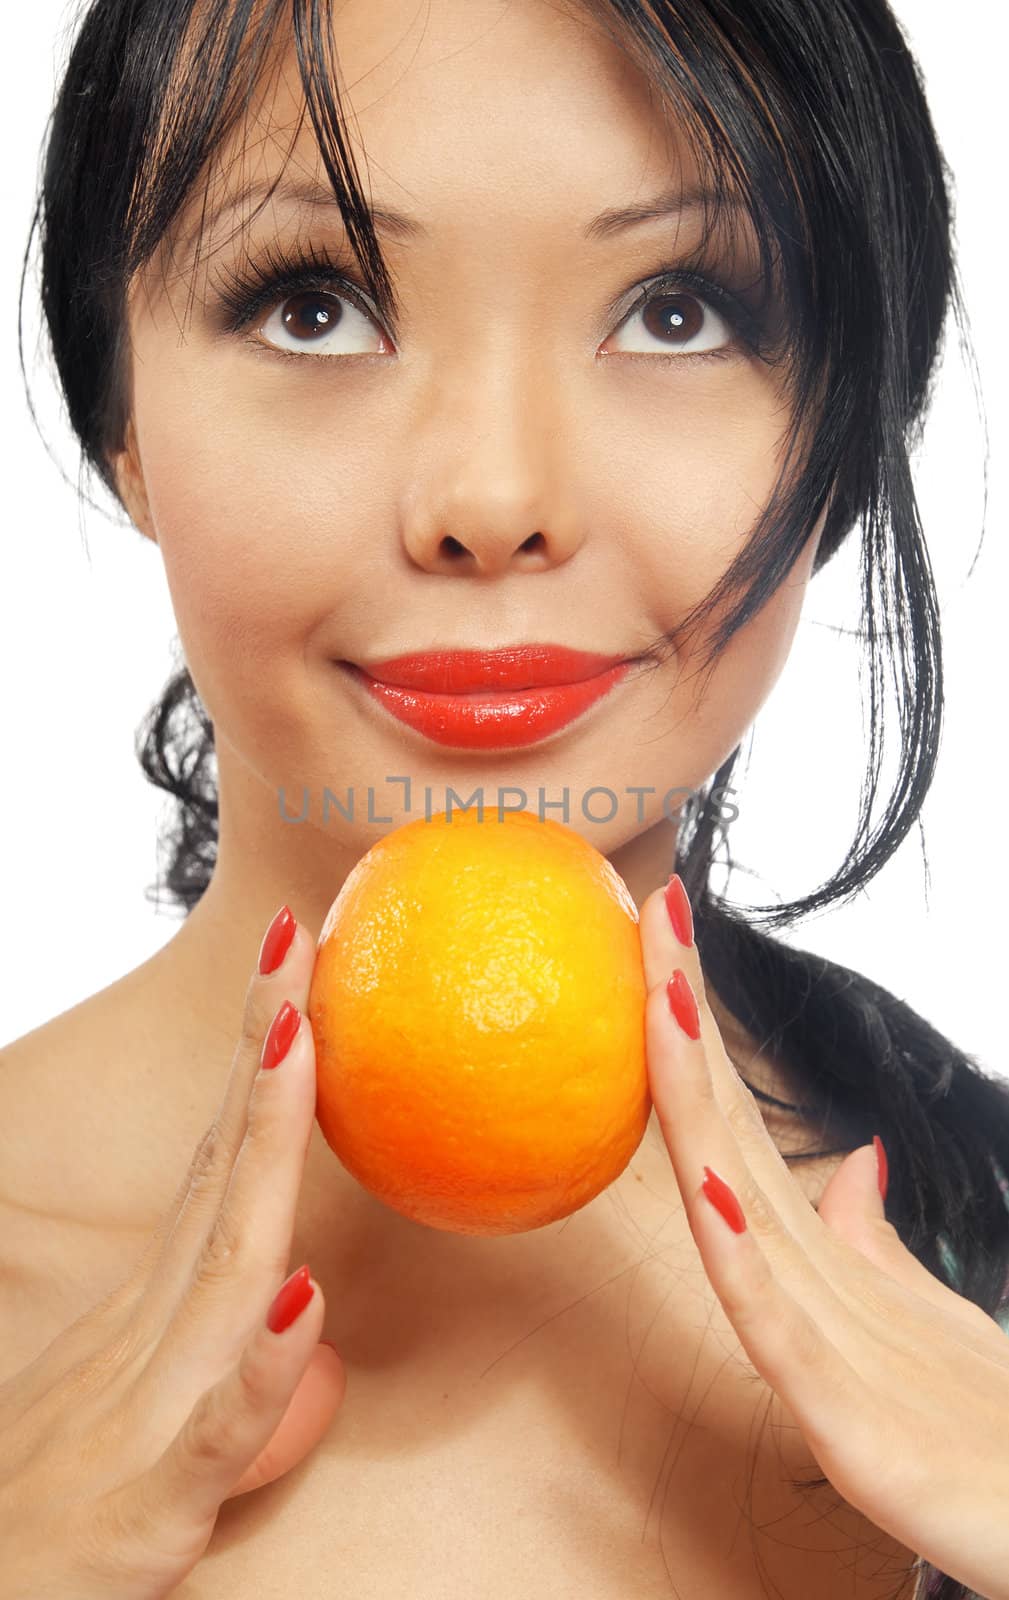 Portrait of smiling woman holding a fresh orange